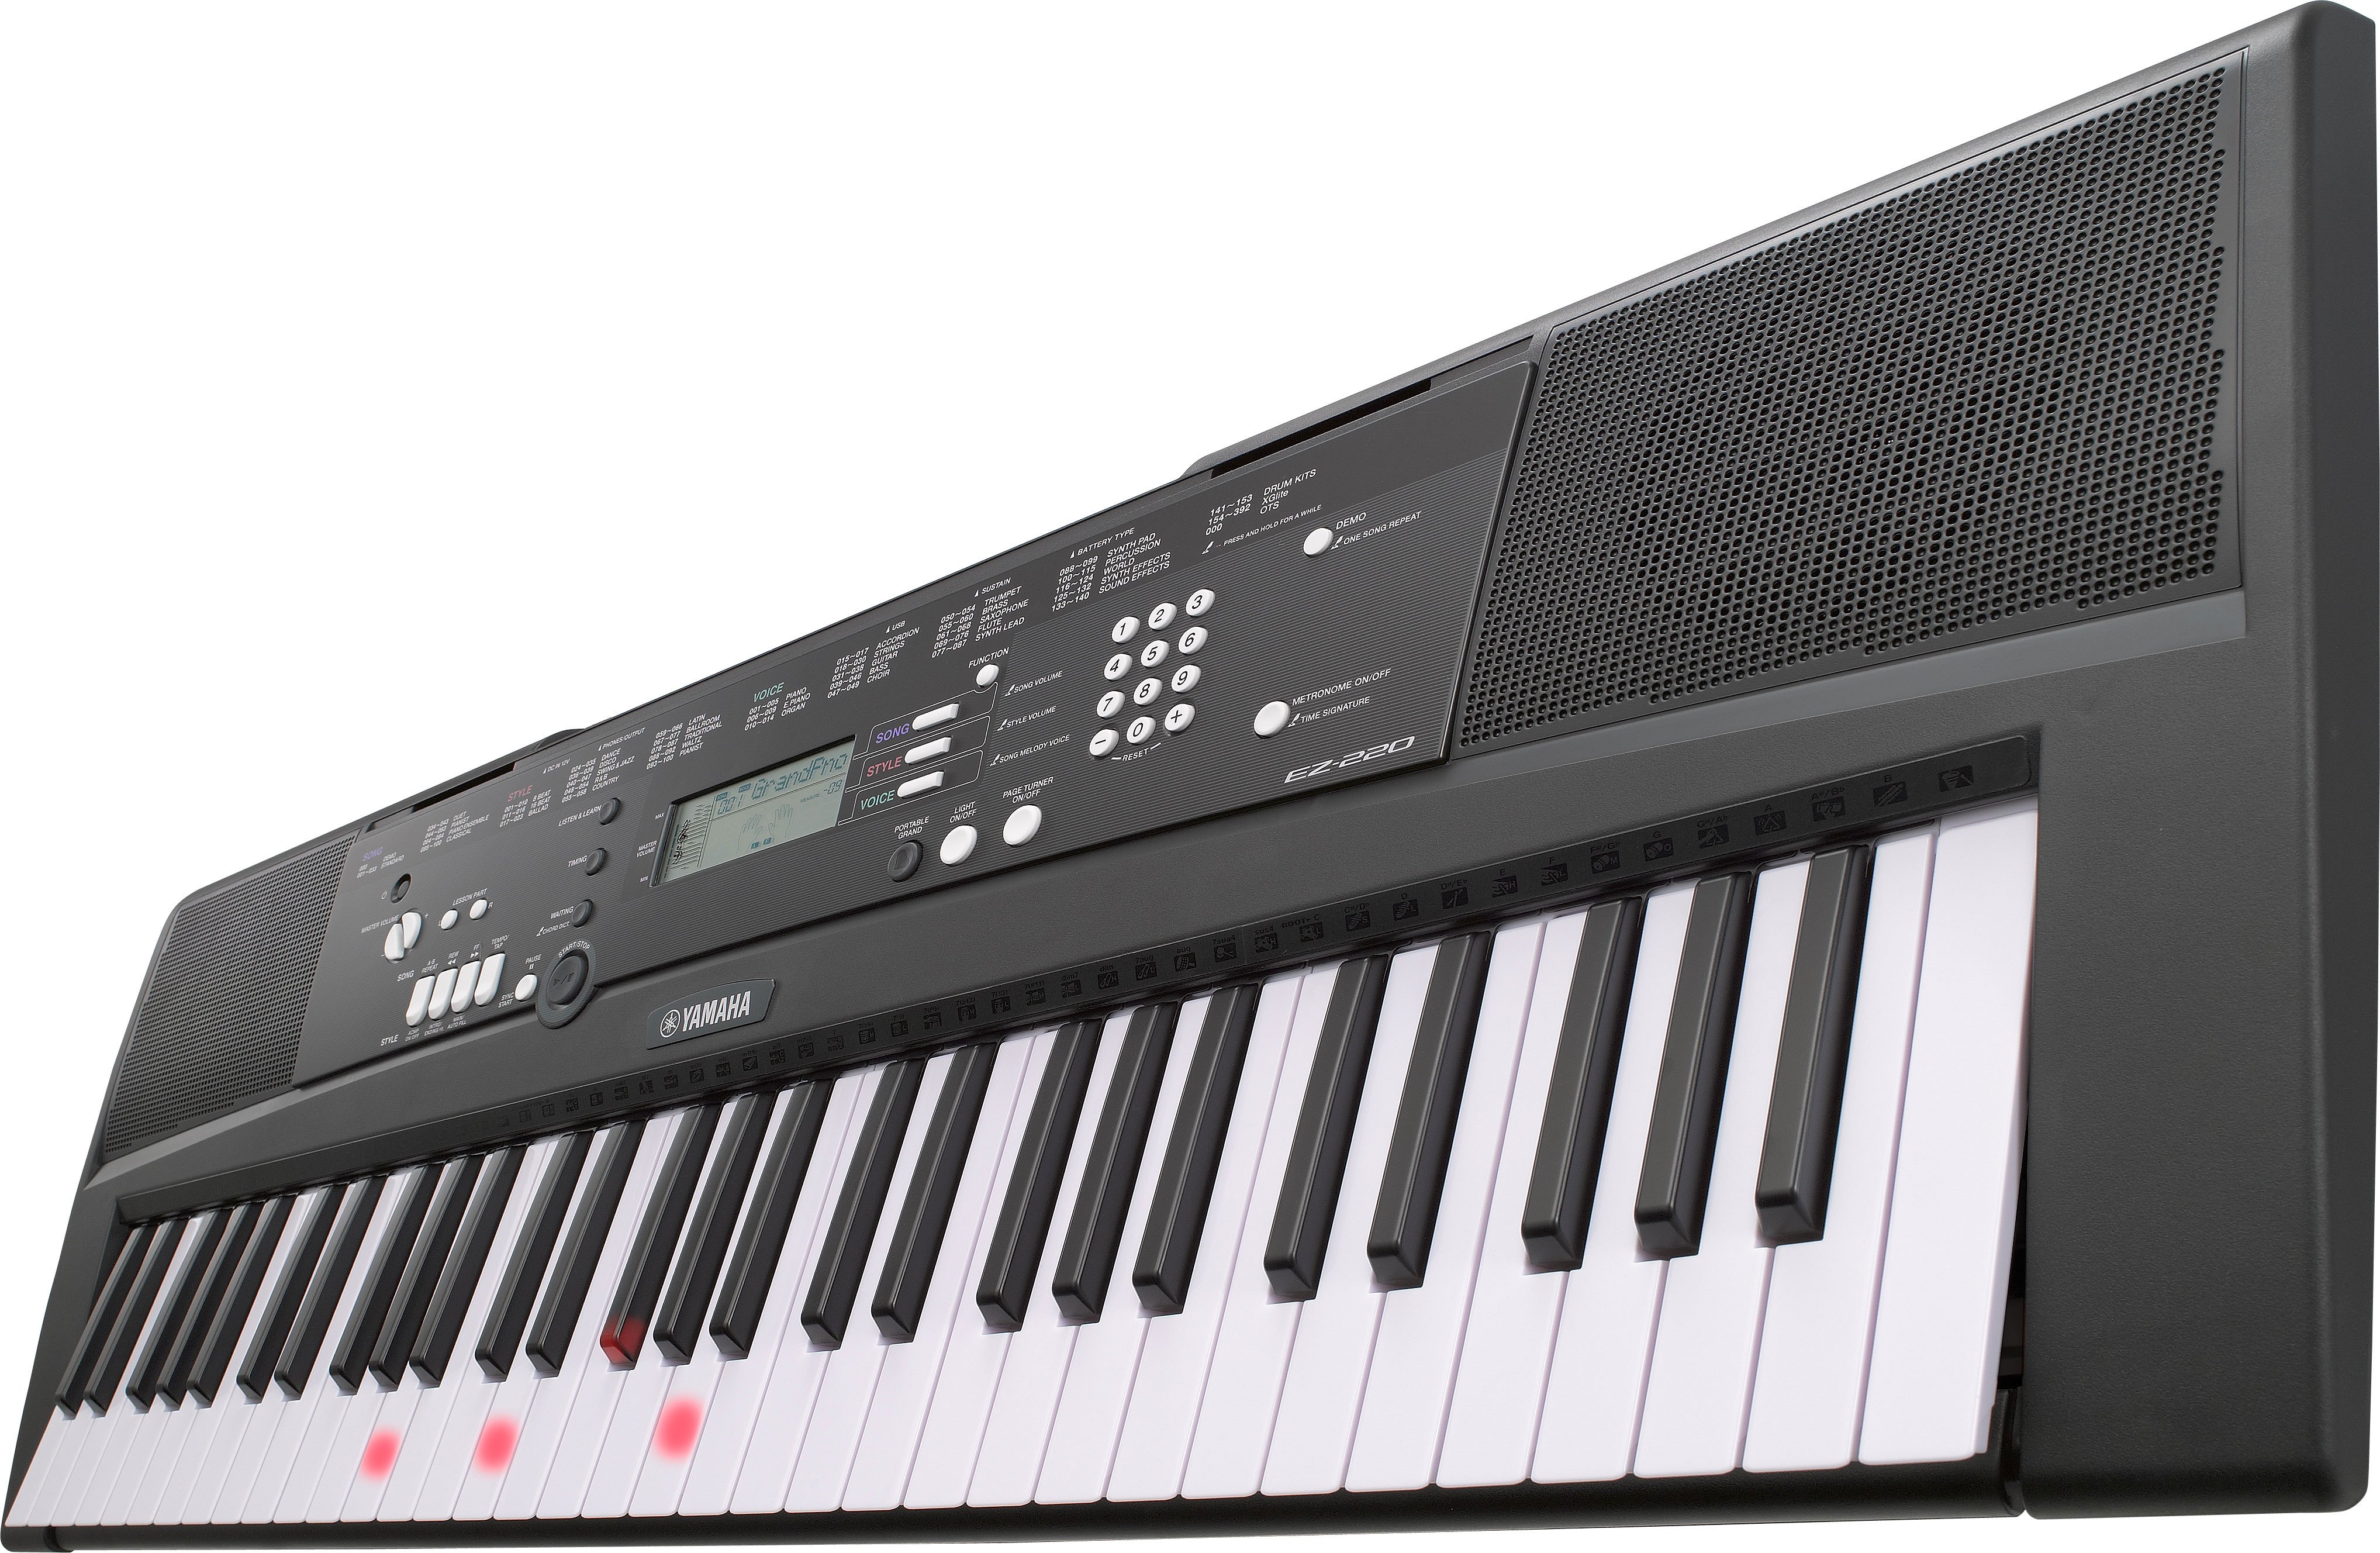 EZ-220 - Descripción - Teclados portátiles - Teclados - Instrumentos musicales - Productos - Yamaha - España